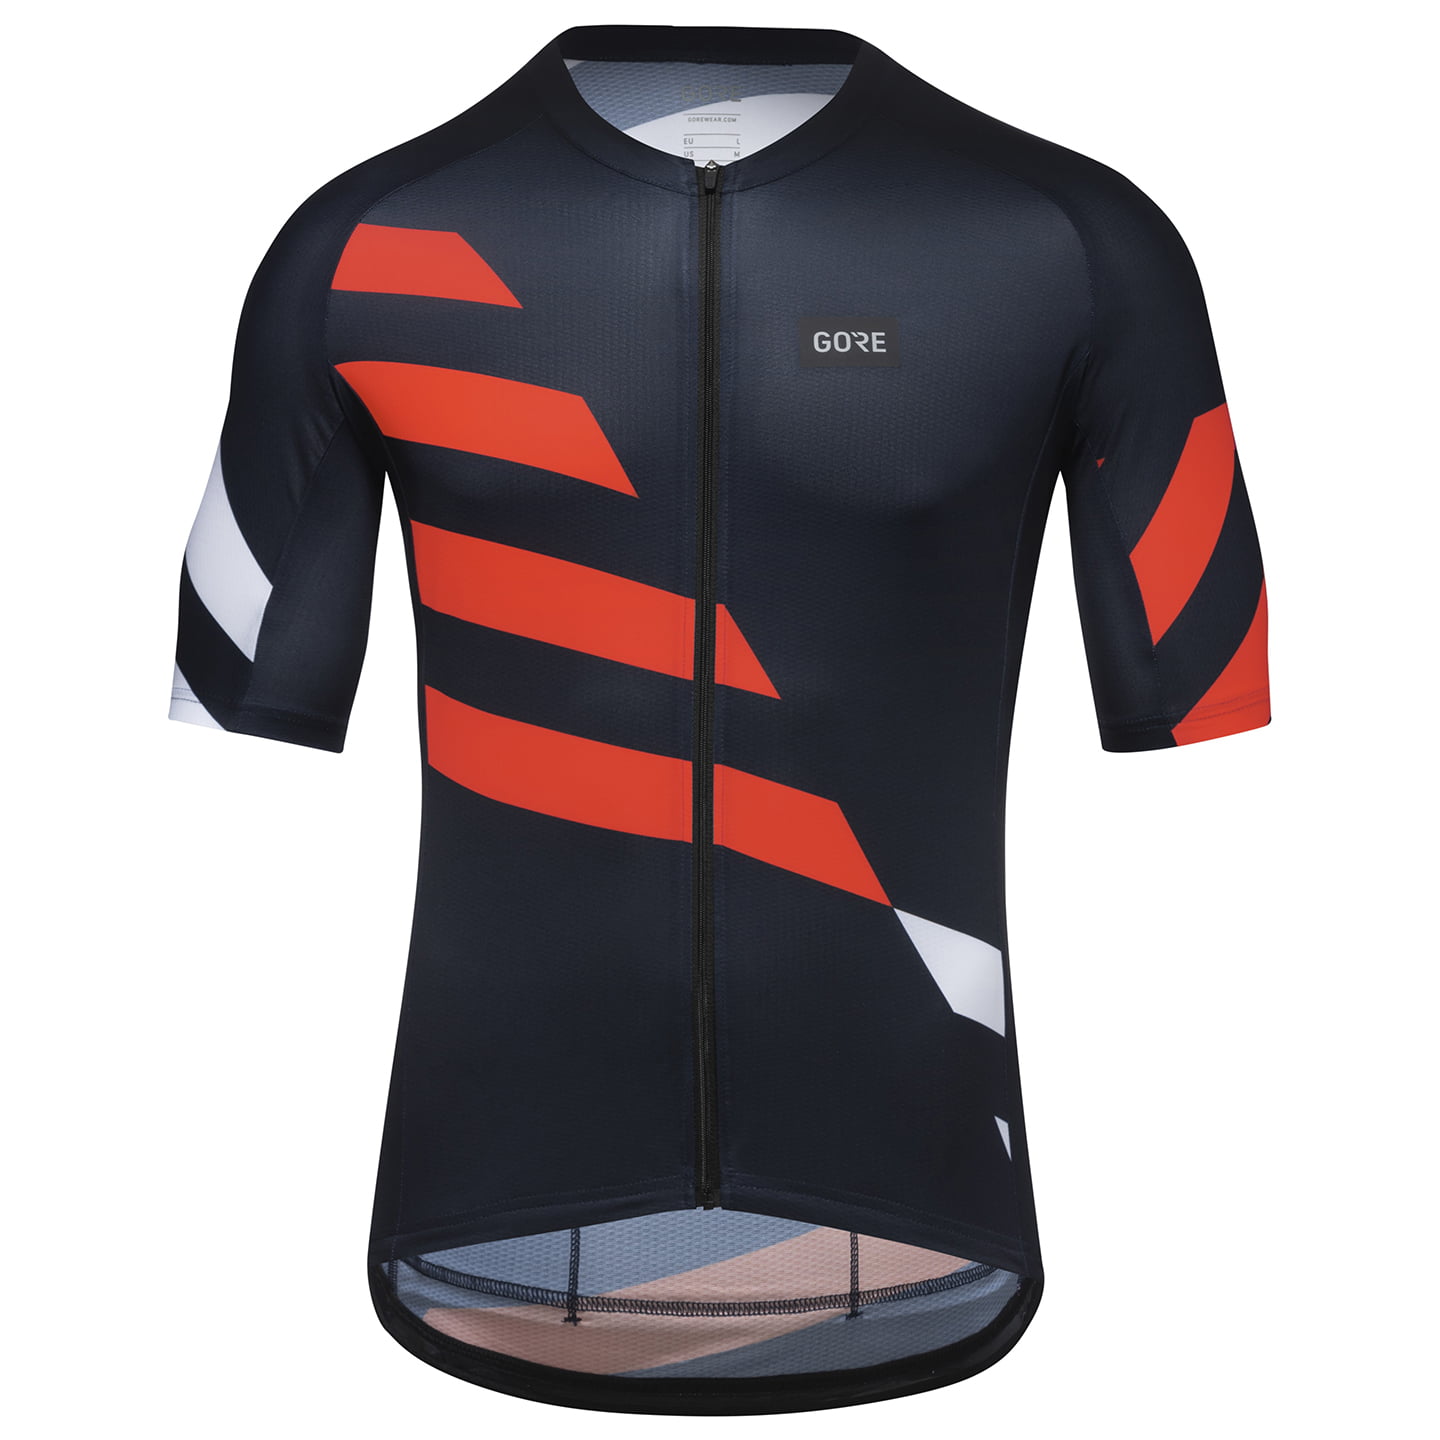 Spirit Signal Chaos Short Sleeve Jersey Short Sleeve Jersey, for men, size M, Cycling jersey, Cycling clothing